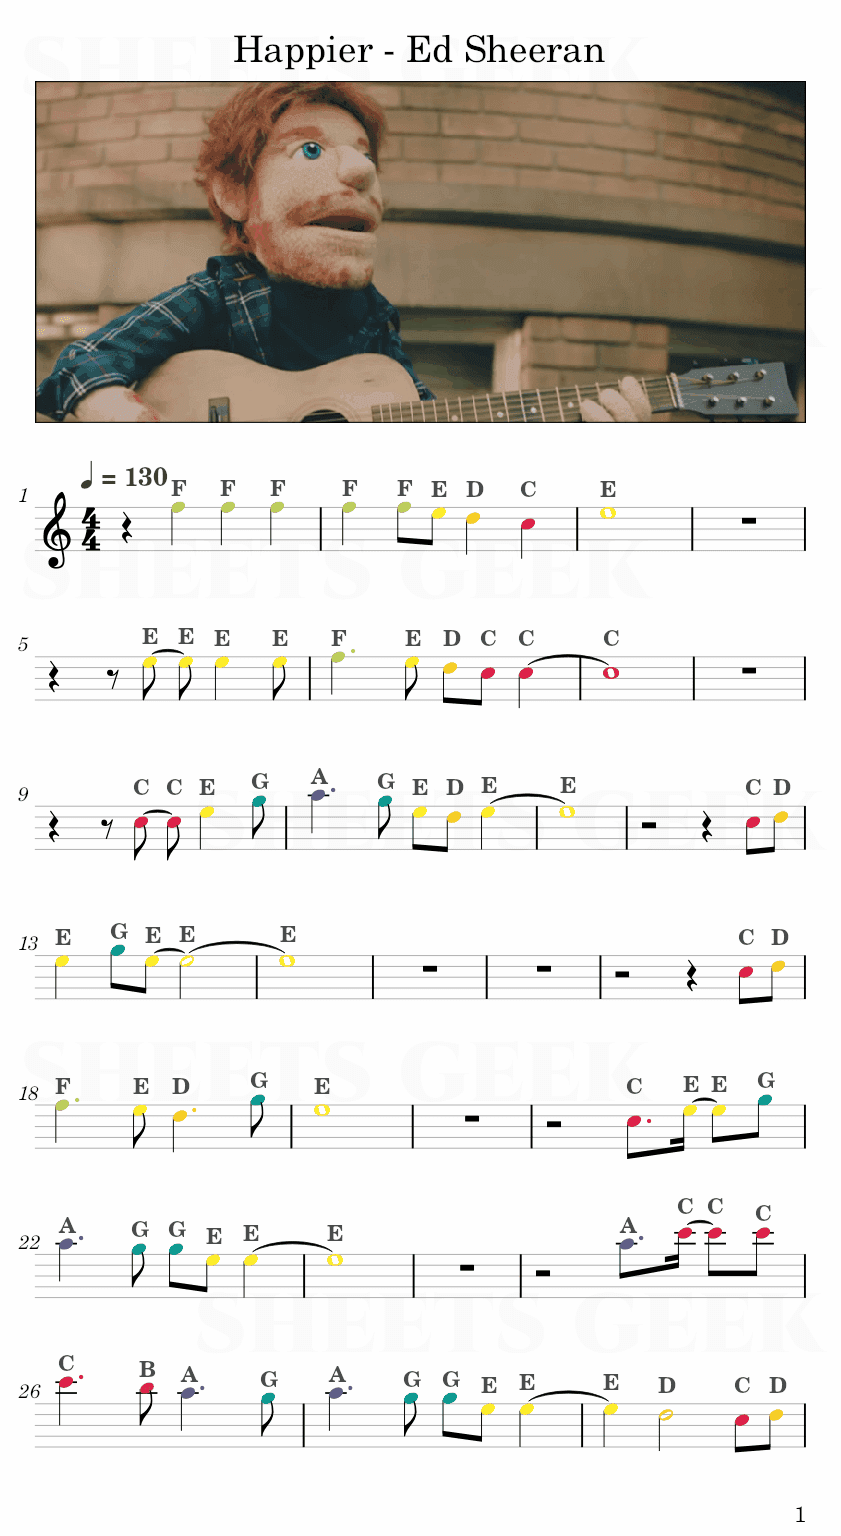 Happier - Ed Sheeran Easy Sheet Music Free for piano, keyboard, flute, violin, sax, cello page 1